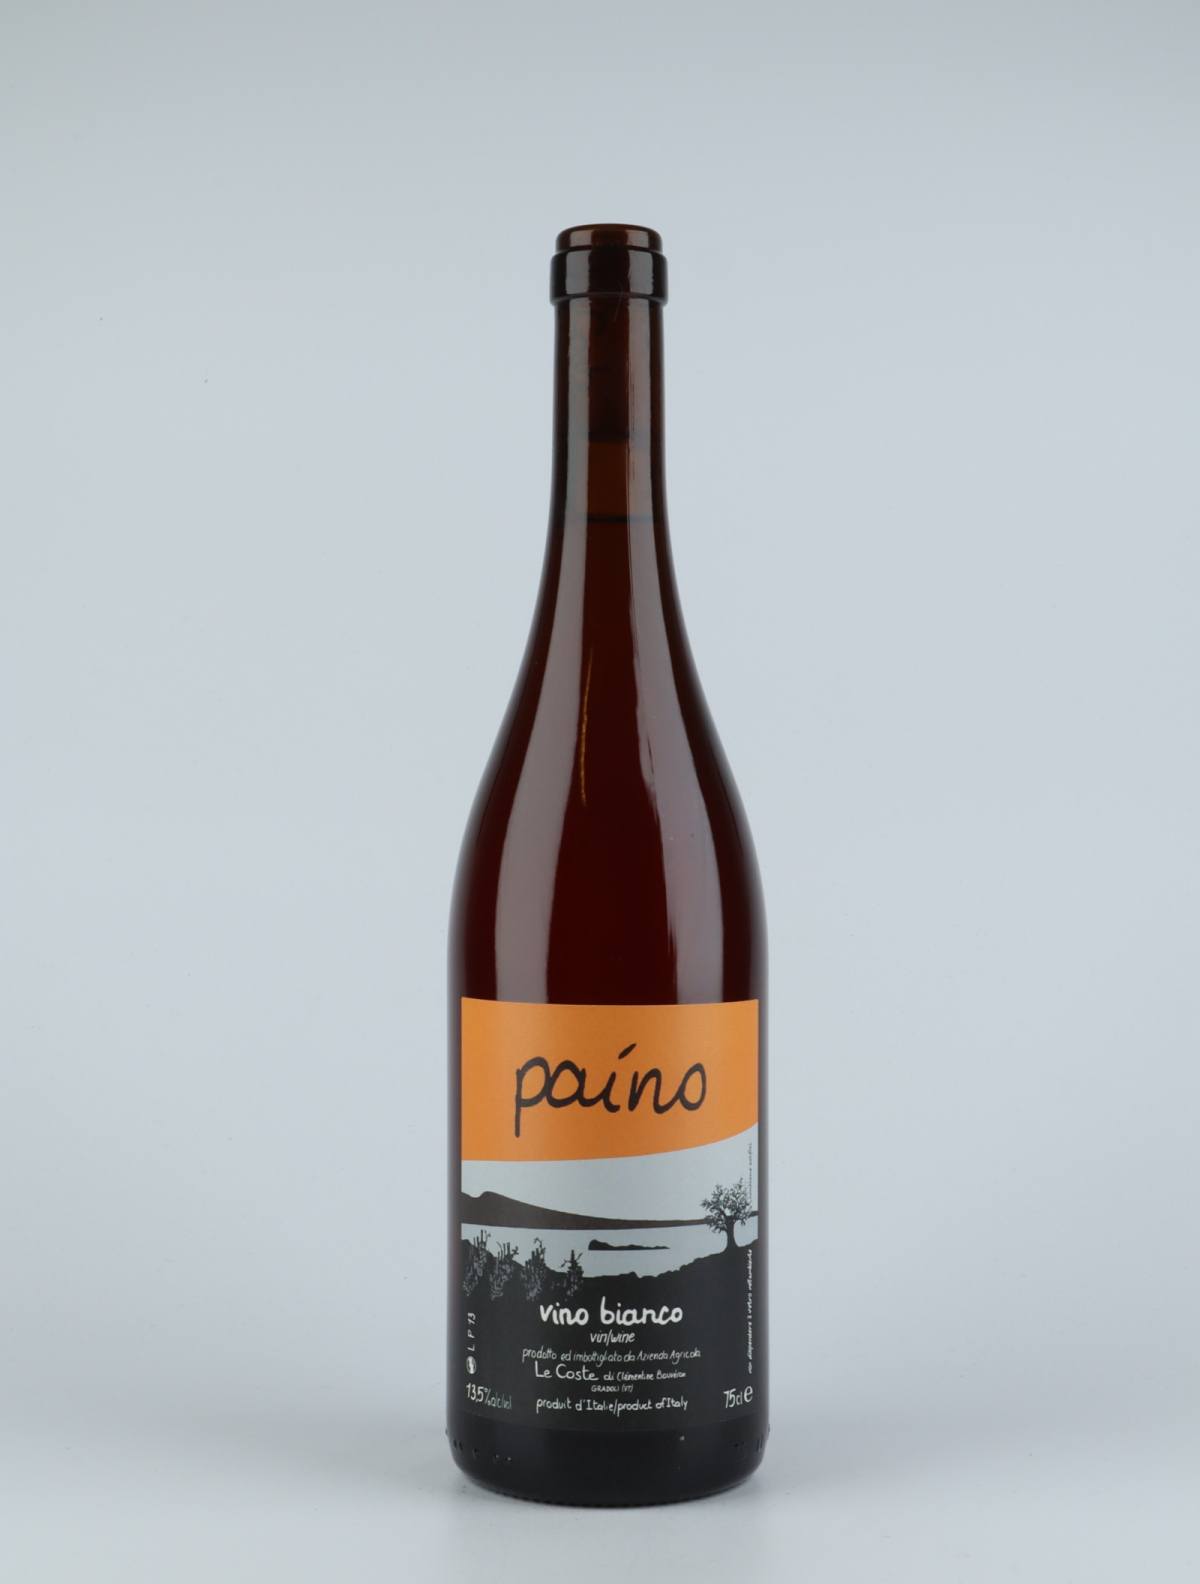 En flaske 2013 Paino Bianco Orange vin fra Le Coste, Lazio i Italien